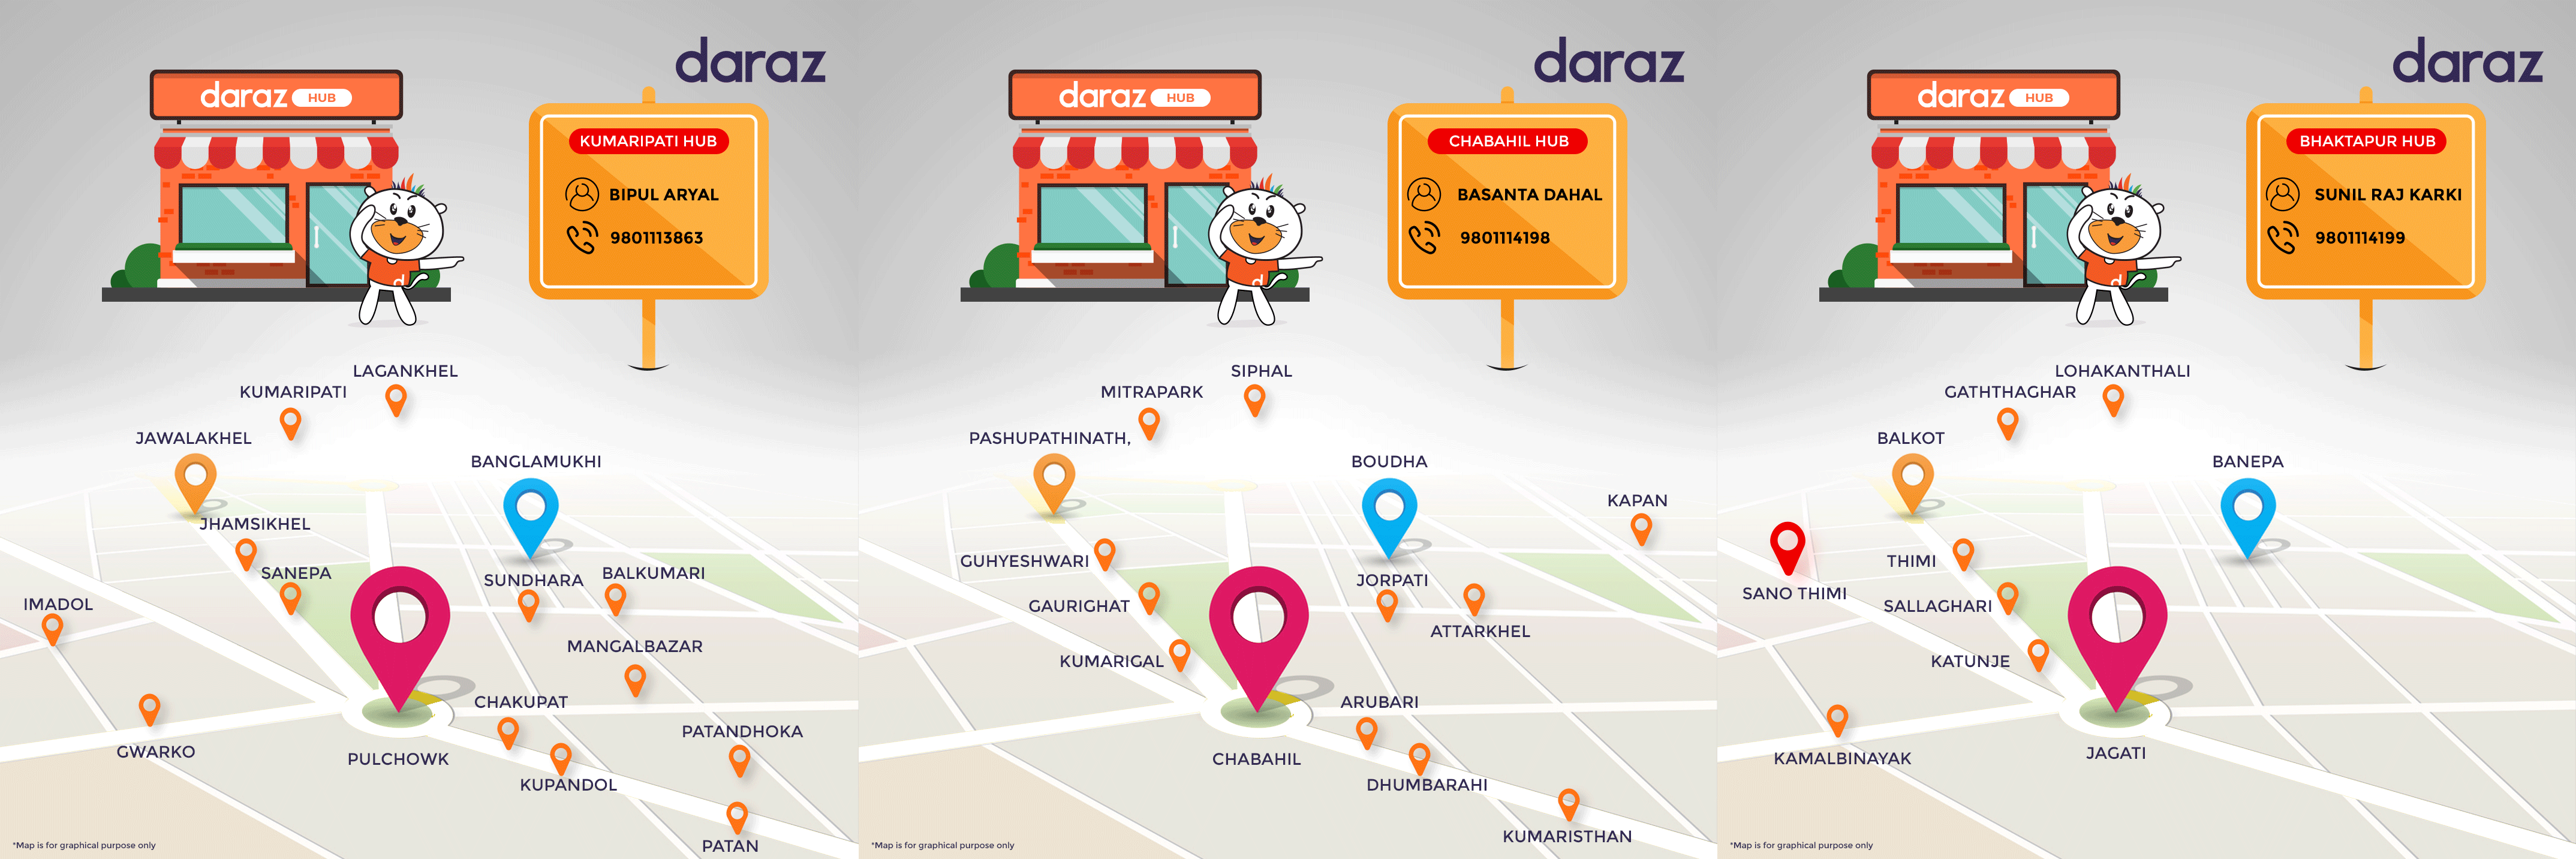 Daraz Hub Maps